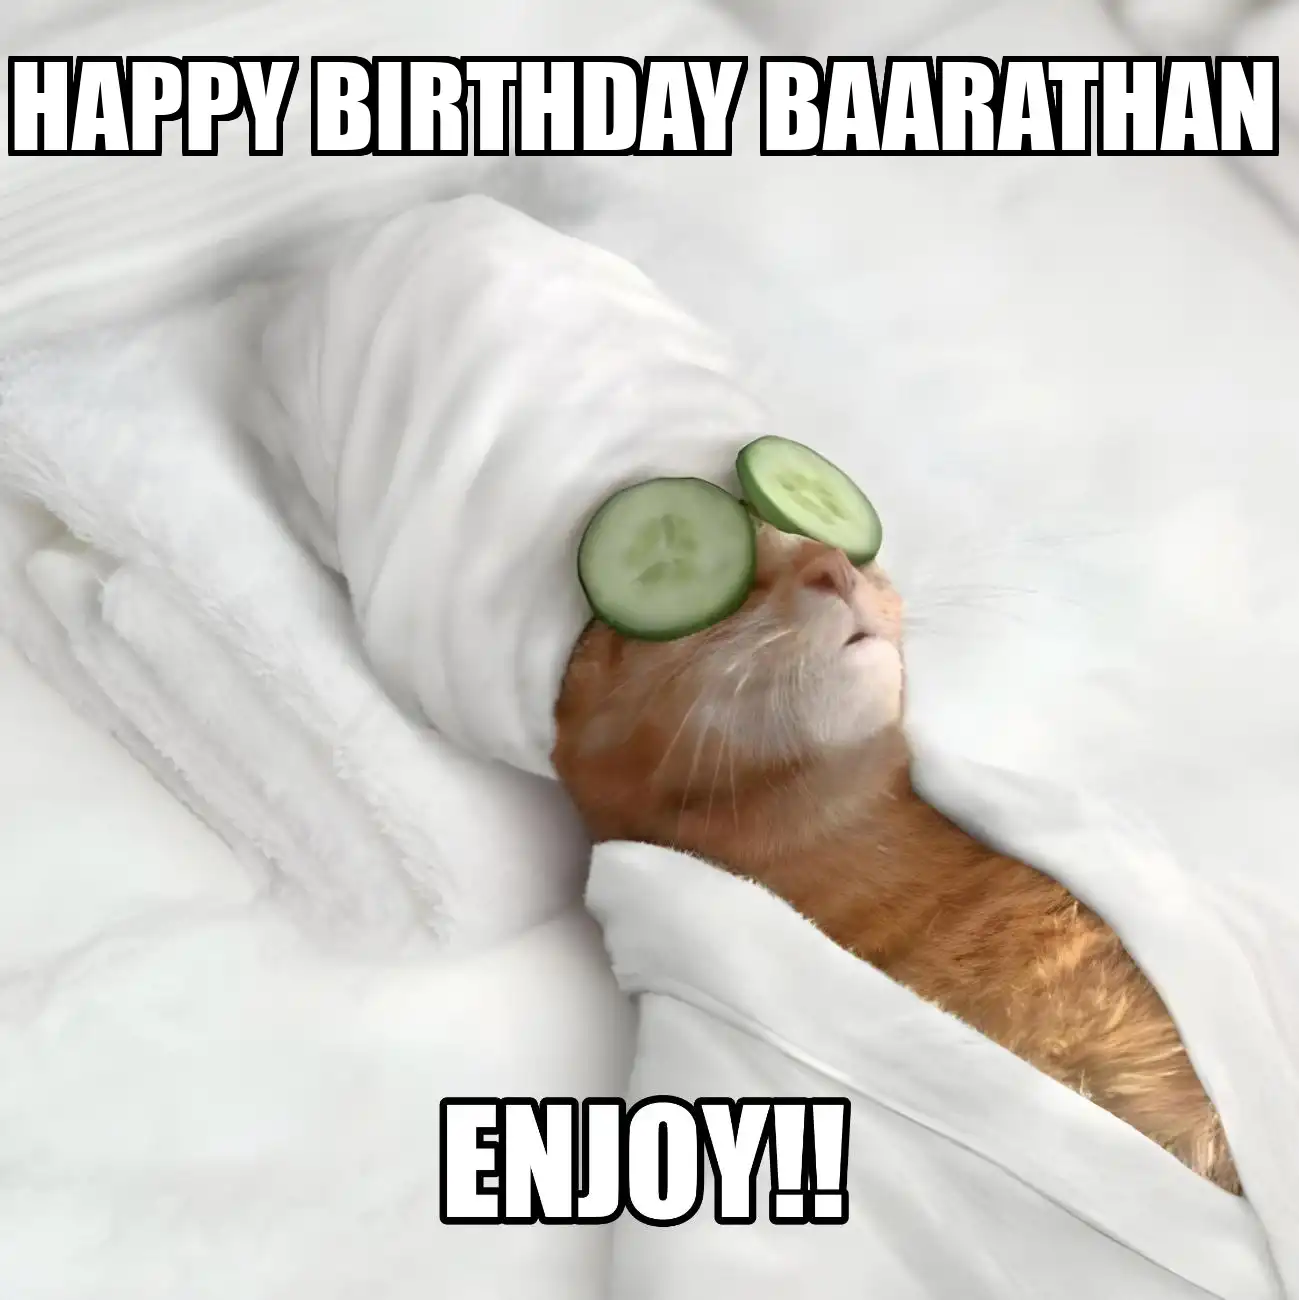 Happy Birthday Baarathan Enjoy Cat Meme